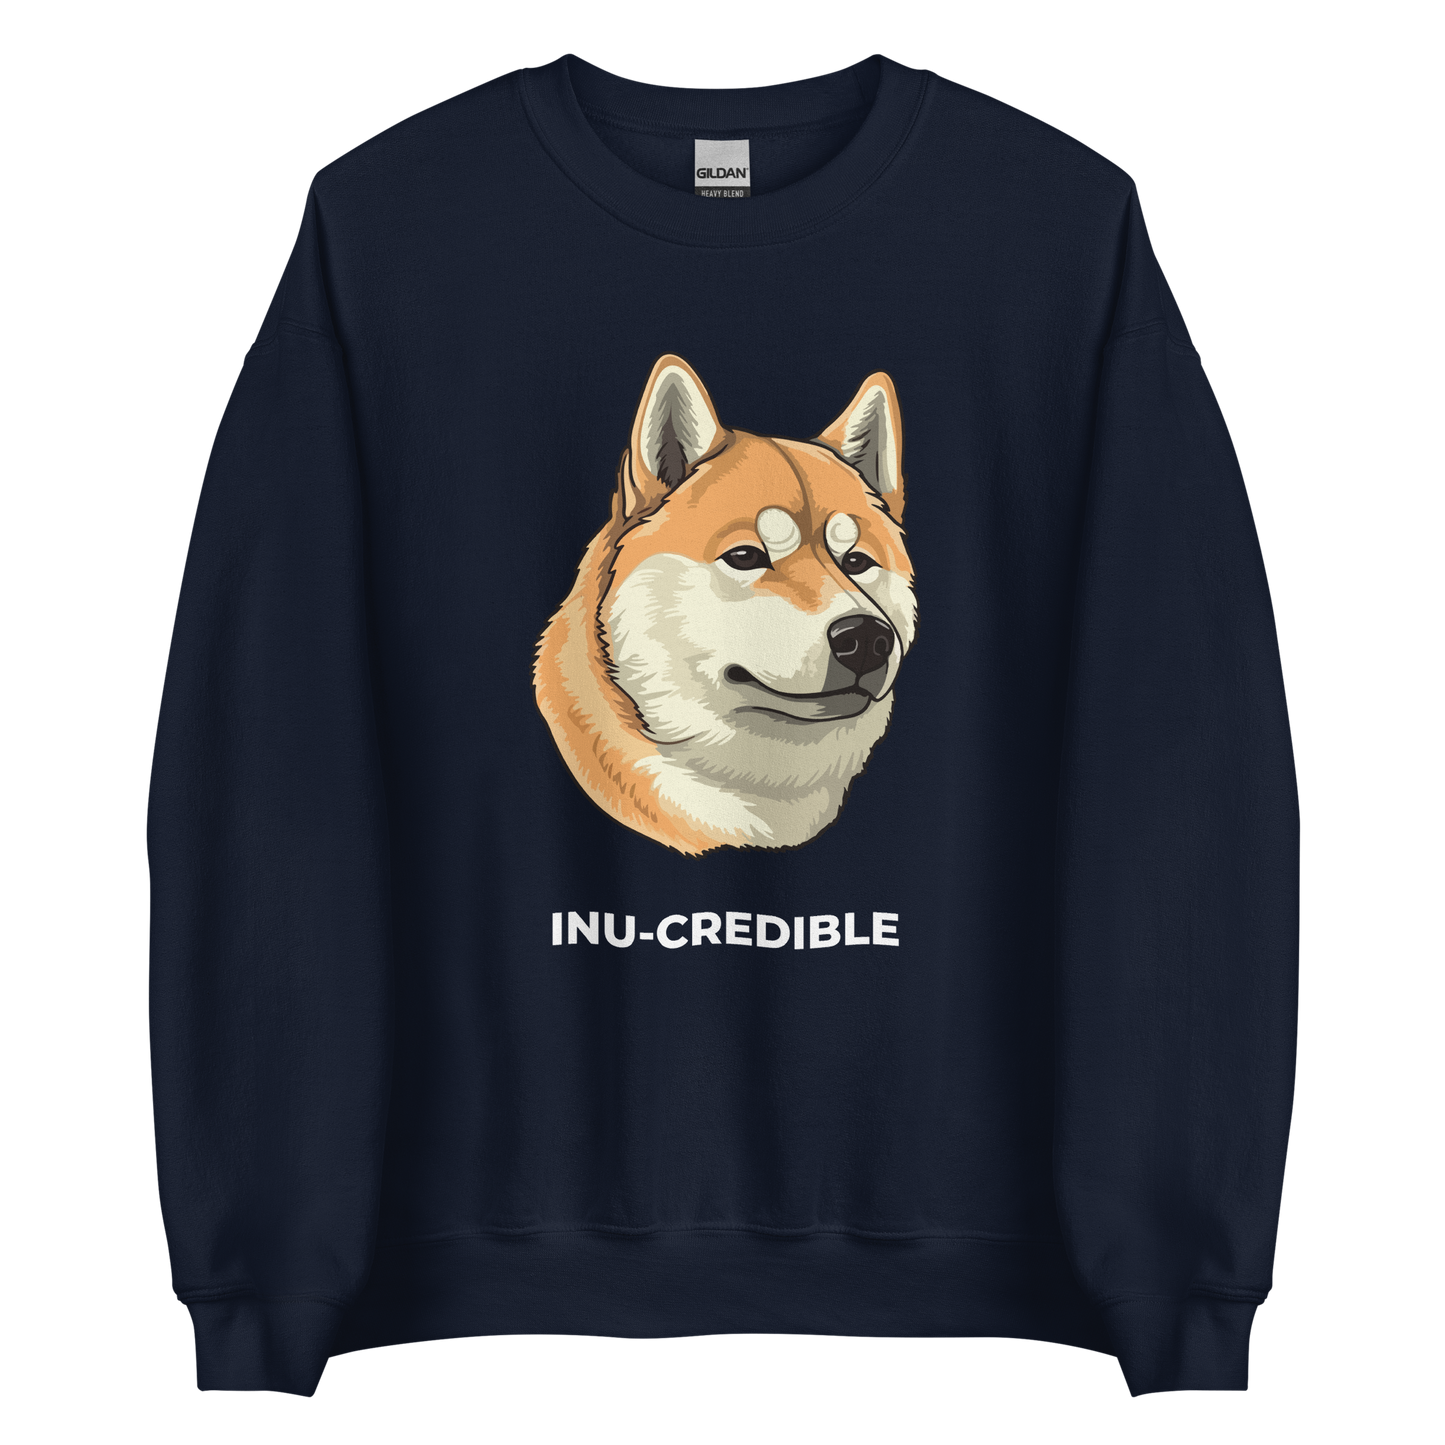 Navy Shiba Inu Sweatshirt featuring the Inu-Credible graphic on the chest - Funny Graphic Shiba Inu Sweatshirts - Boozy Fox